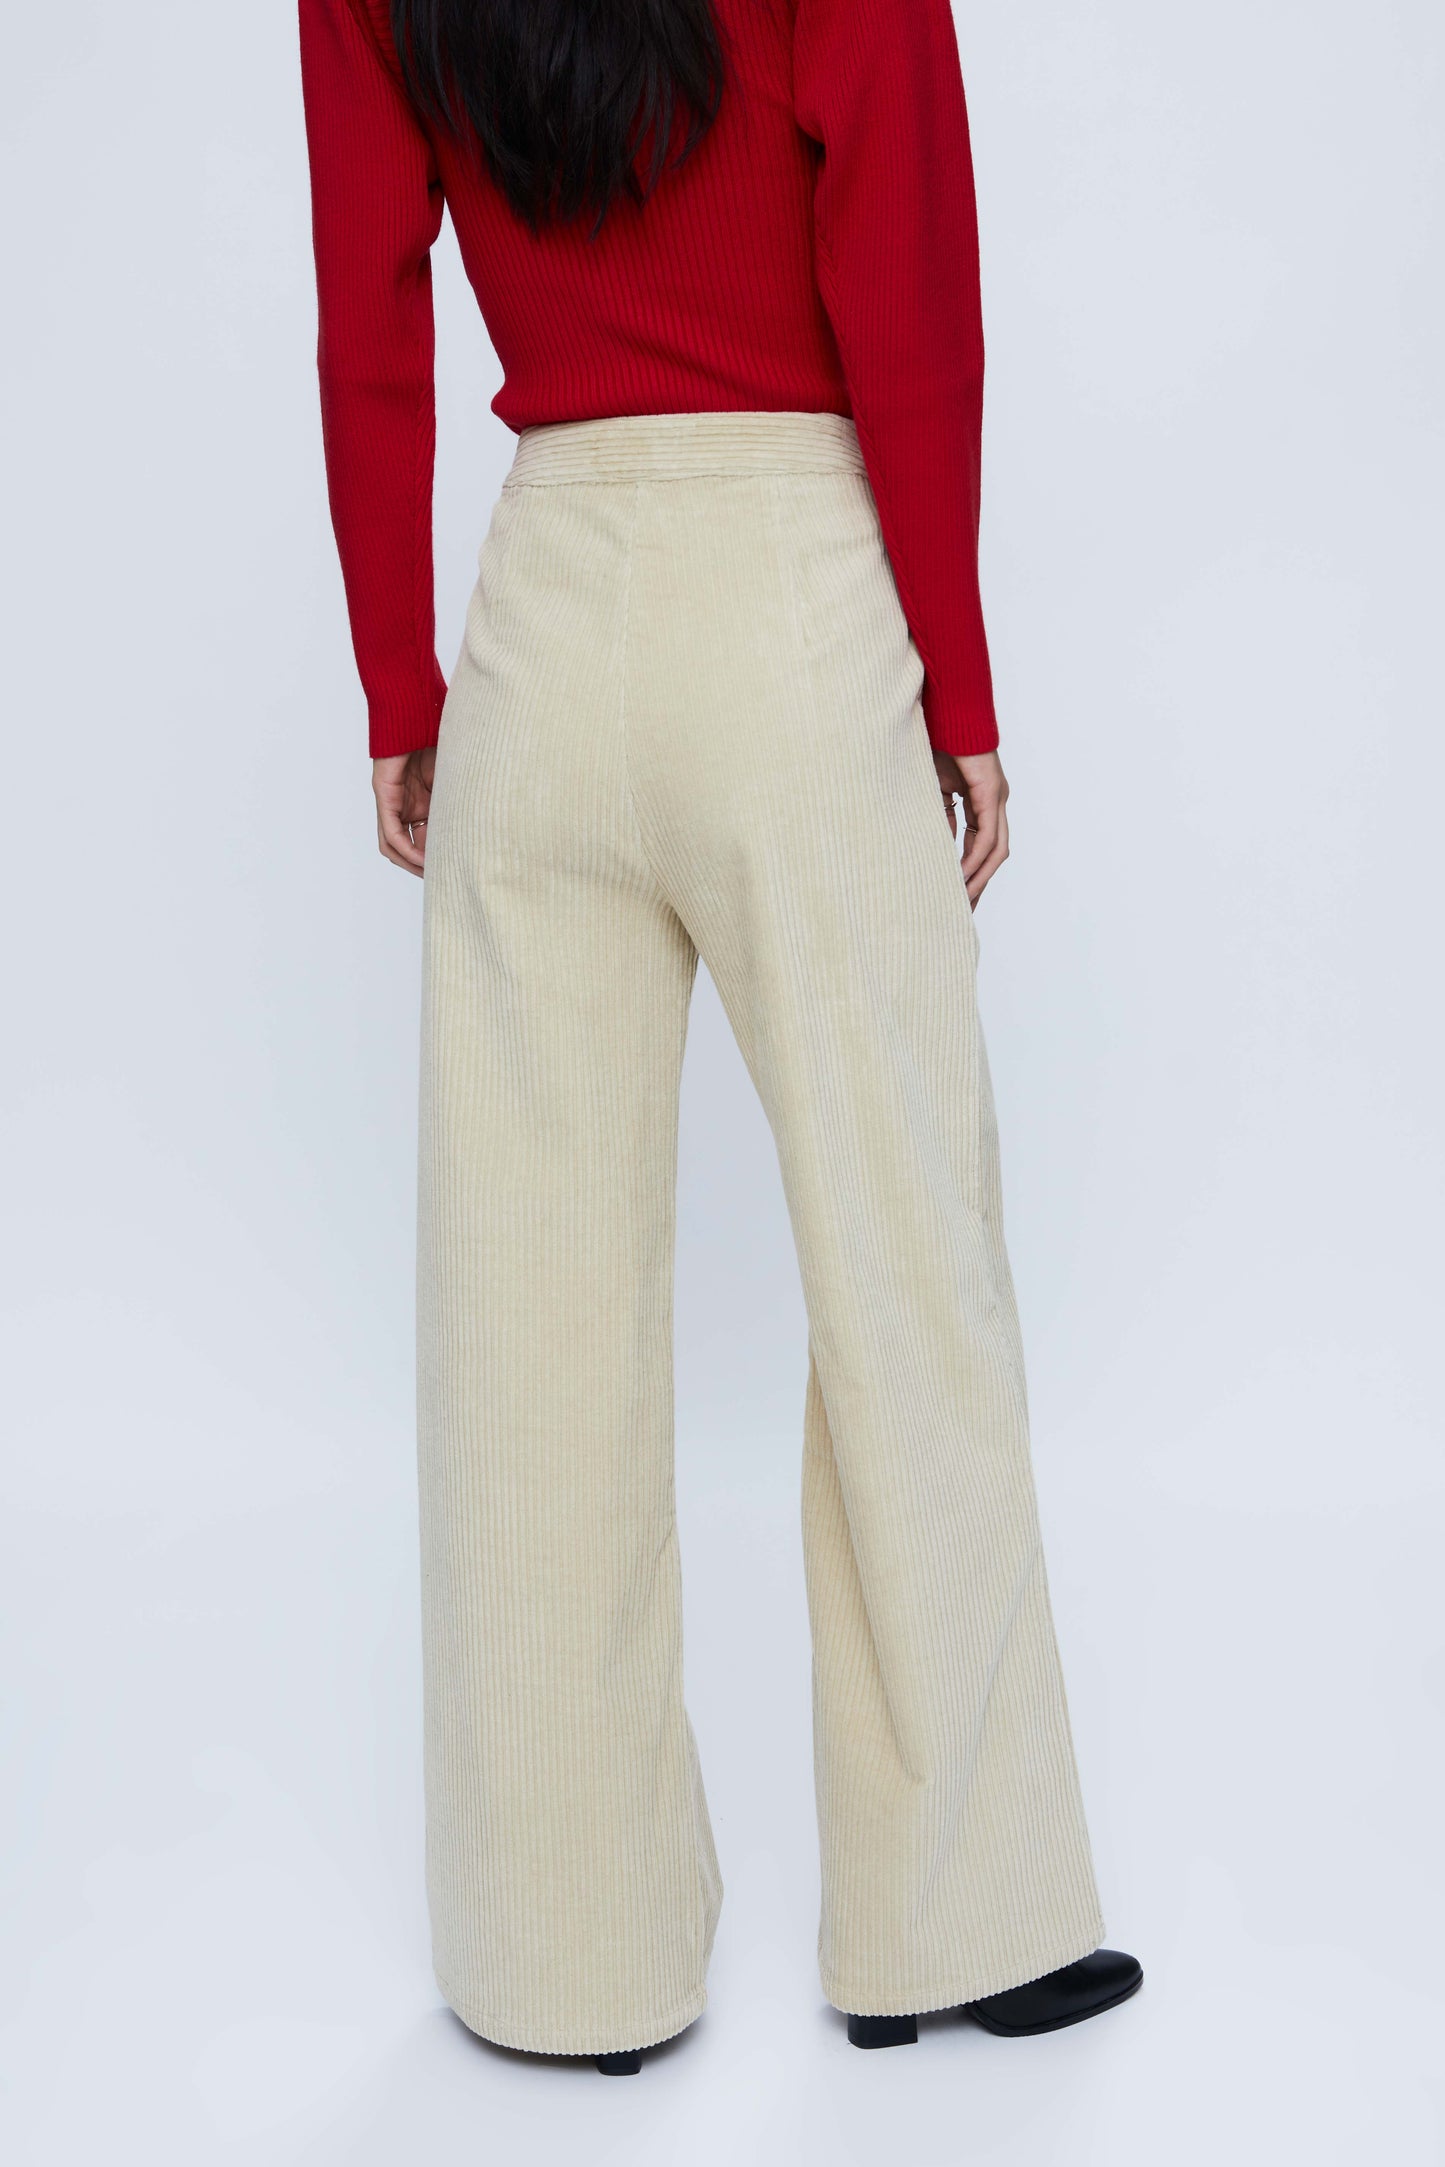 Long white corduroy pants with high waist